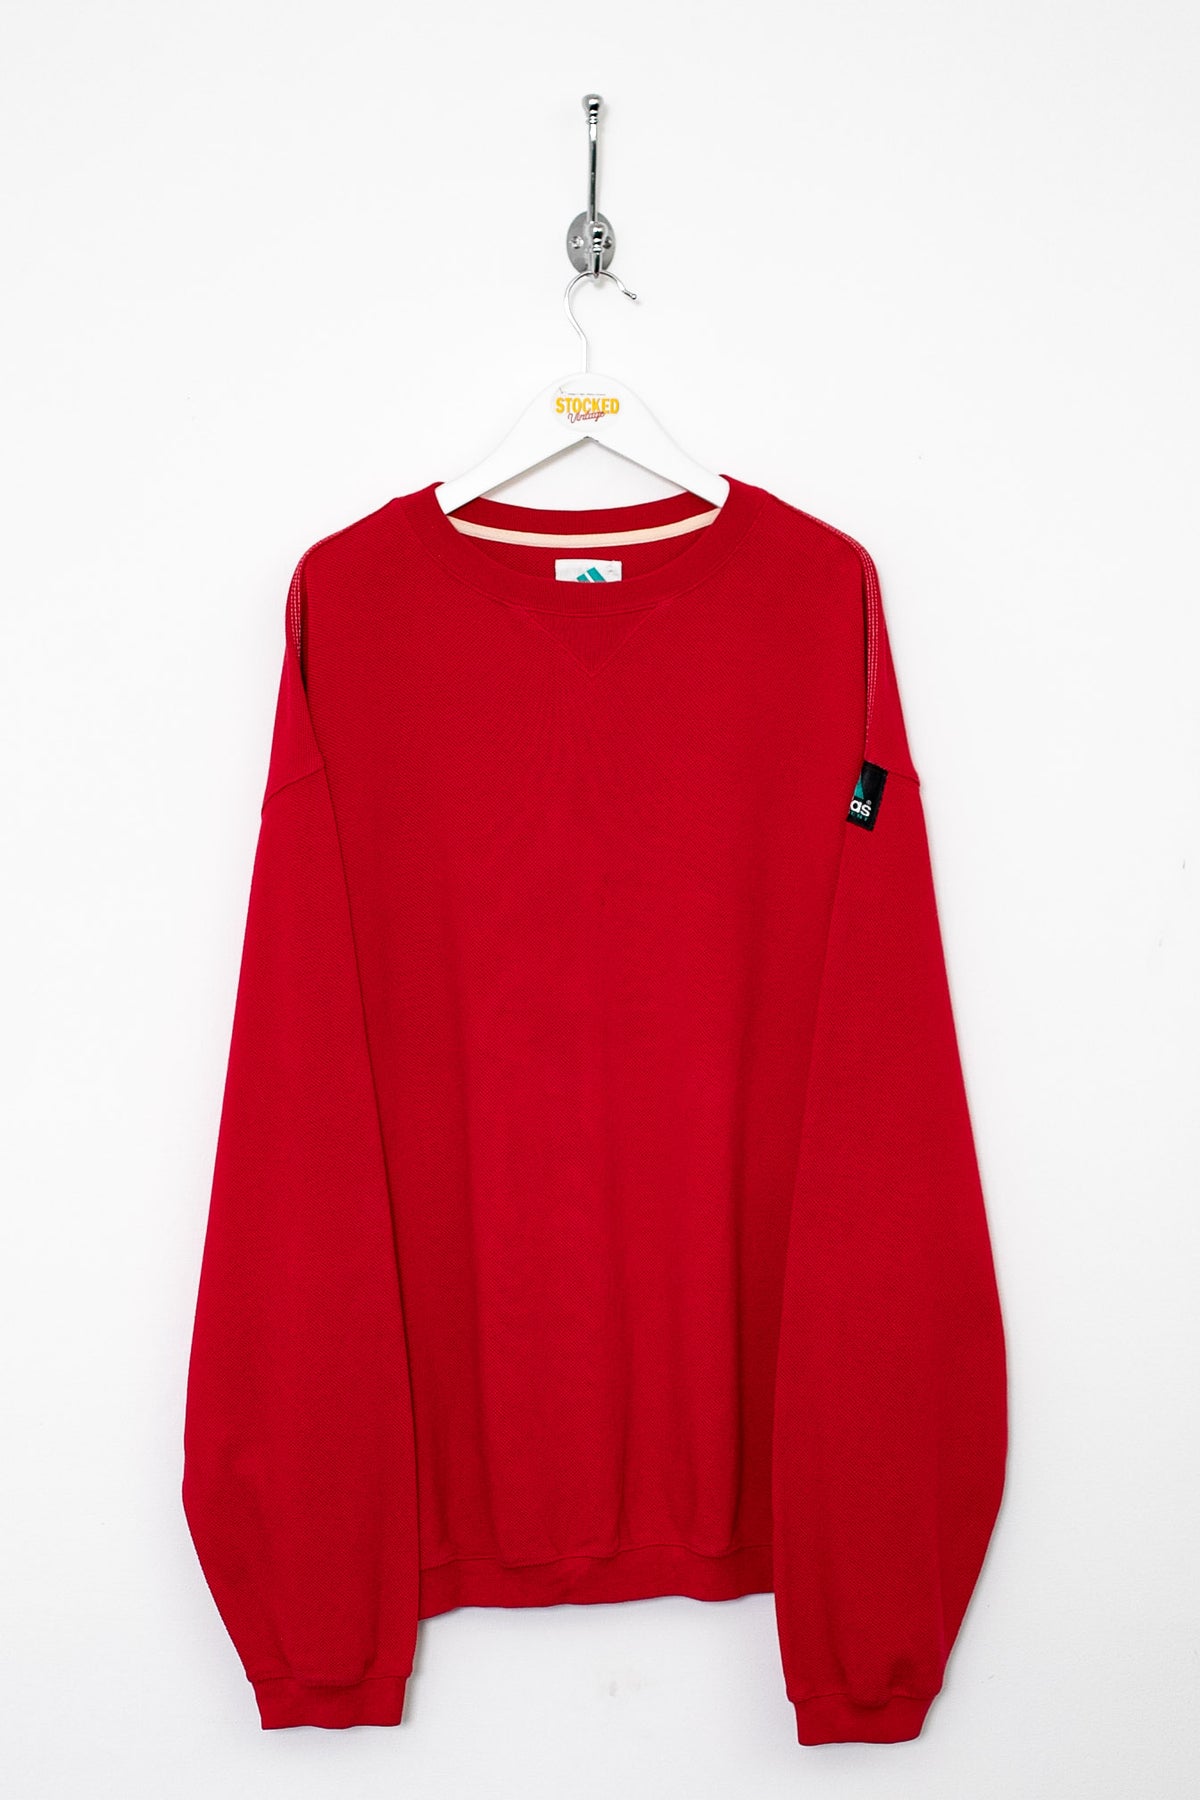 00s Adidas Equipment Sweatshirt (XL)